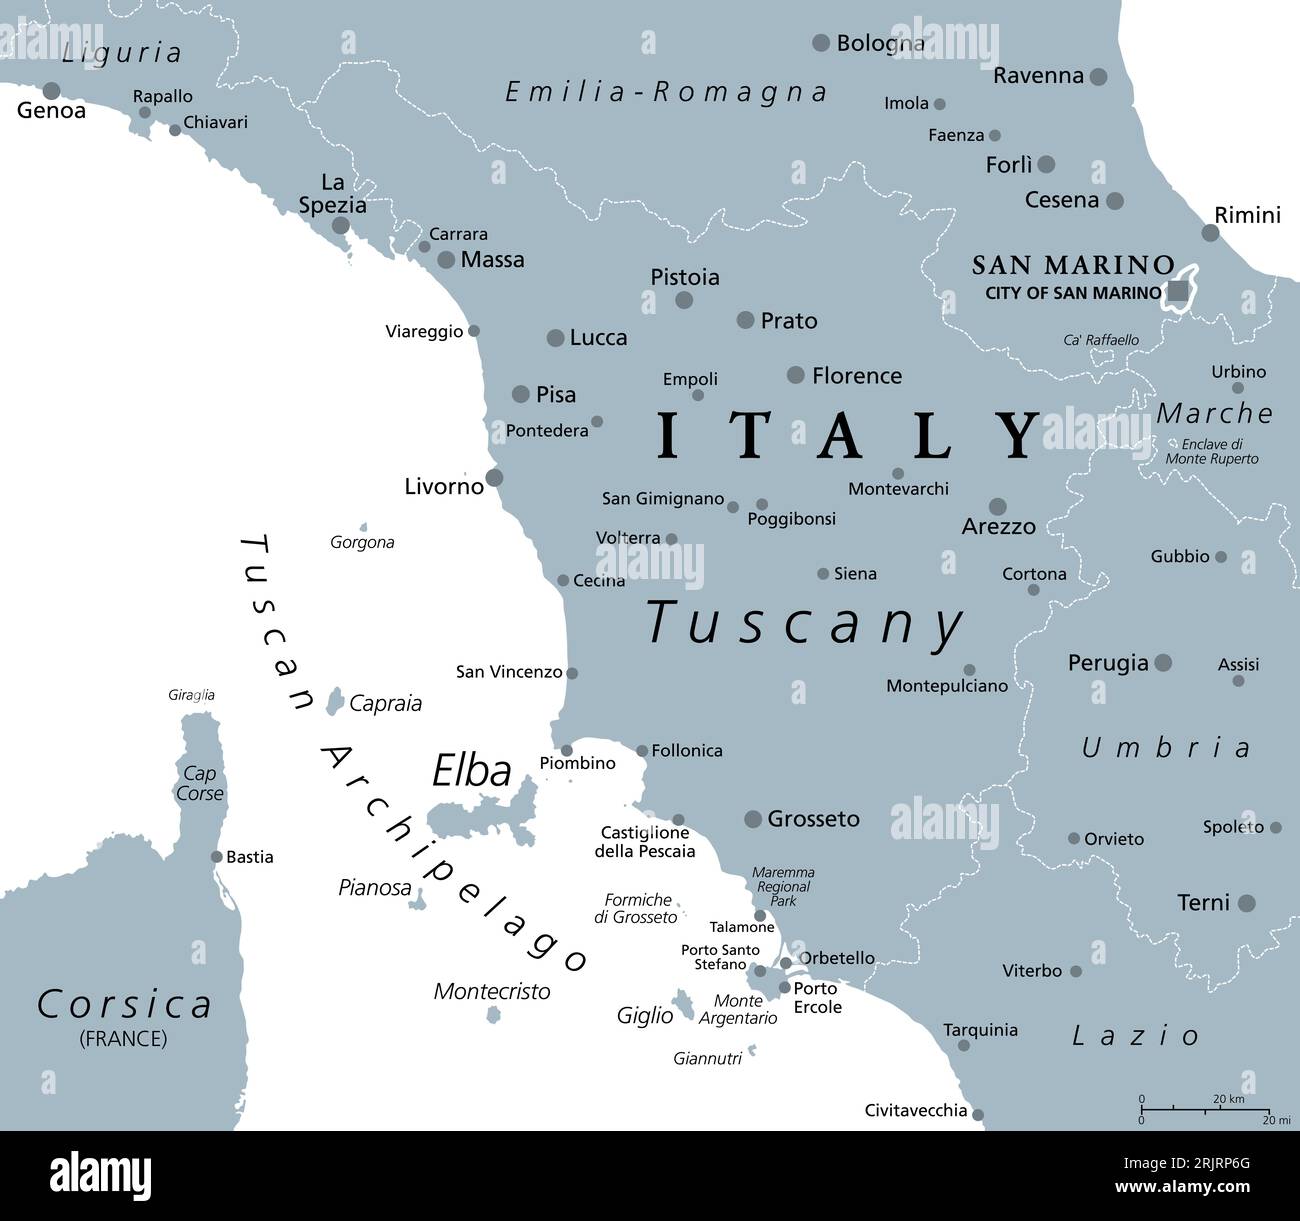 Toskana, Region in Zentralitalien, graue politische Karte mit beliebten Touristenattraktionen wie Florenz, Castiglione della Pescaia, Pisa, Lucca, Grosseto, usw. Stockfoto